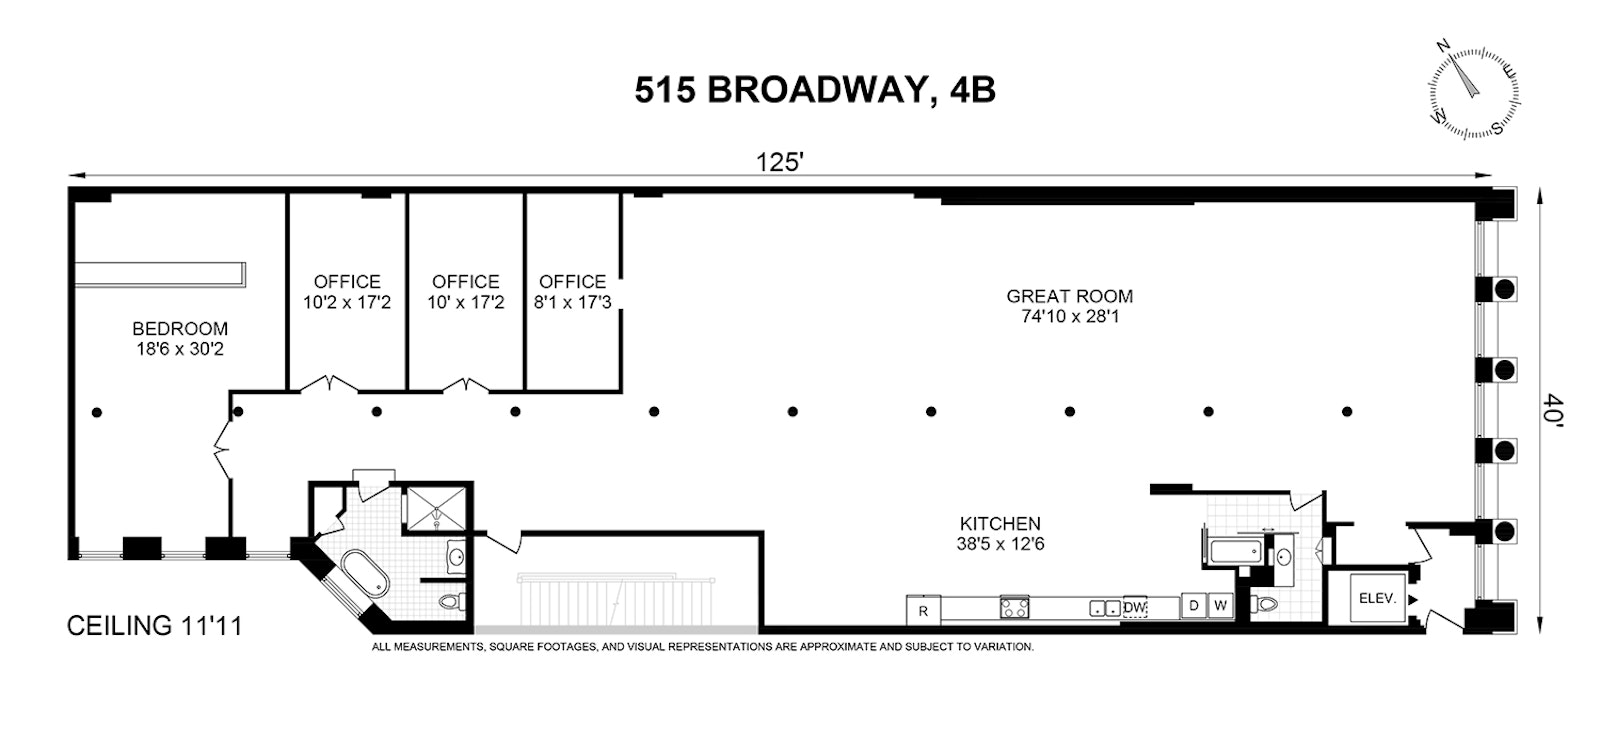 Floorplan for 515 Broadway, 4B